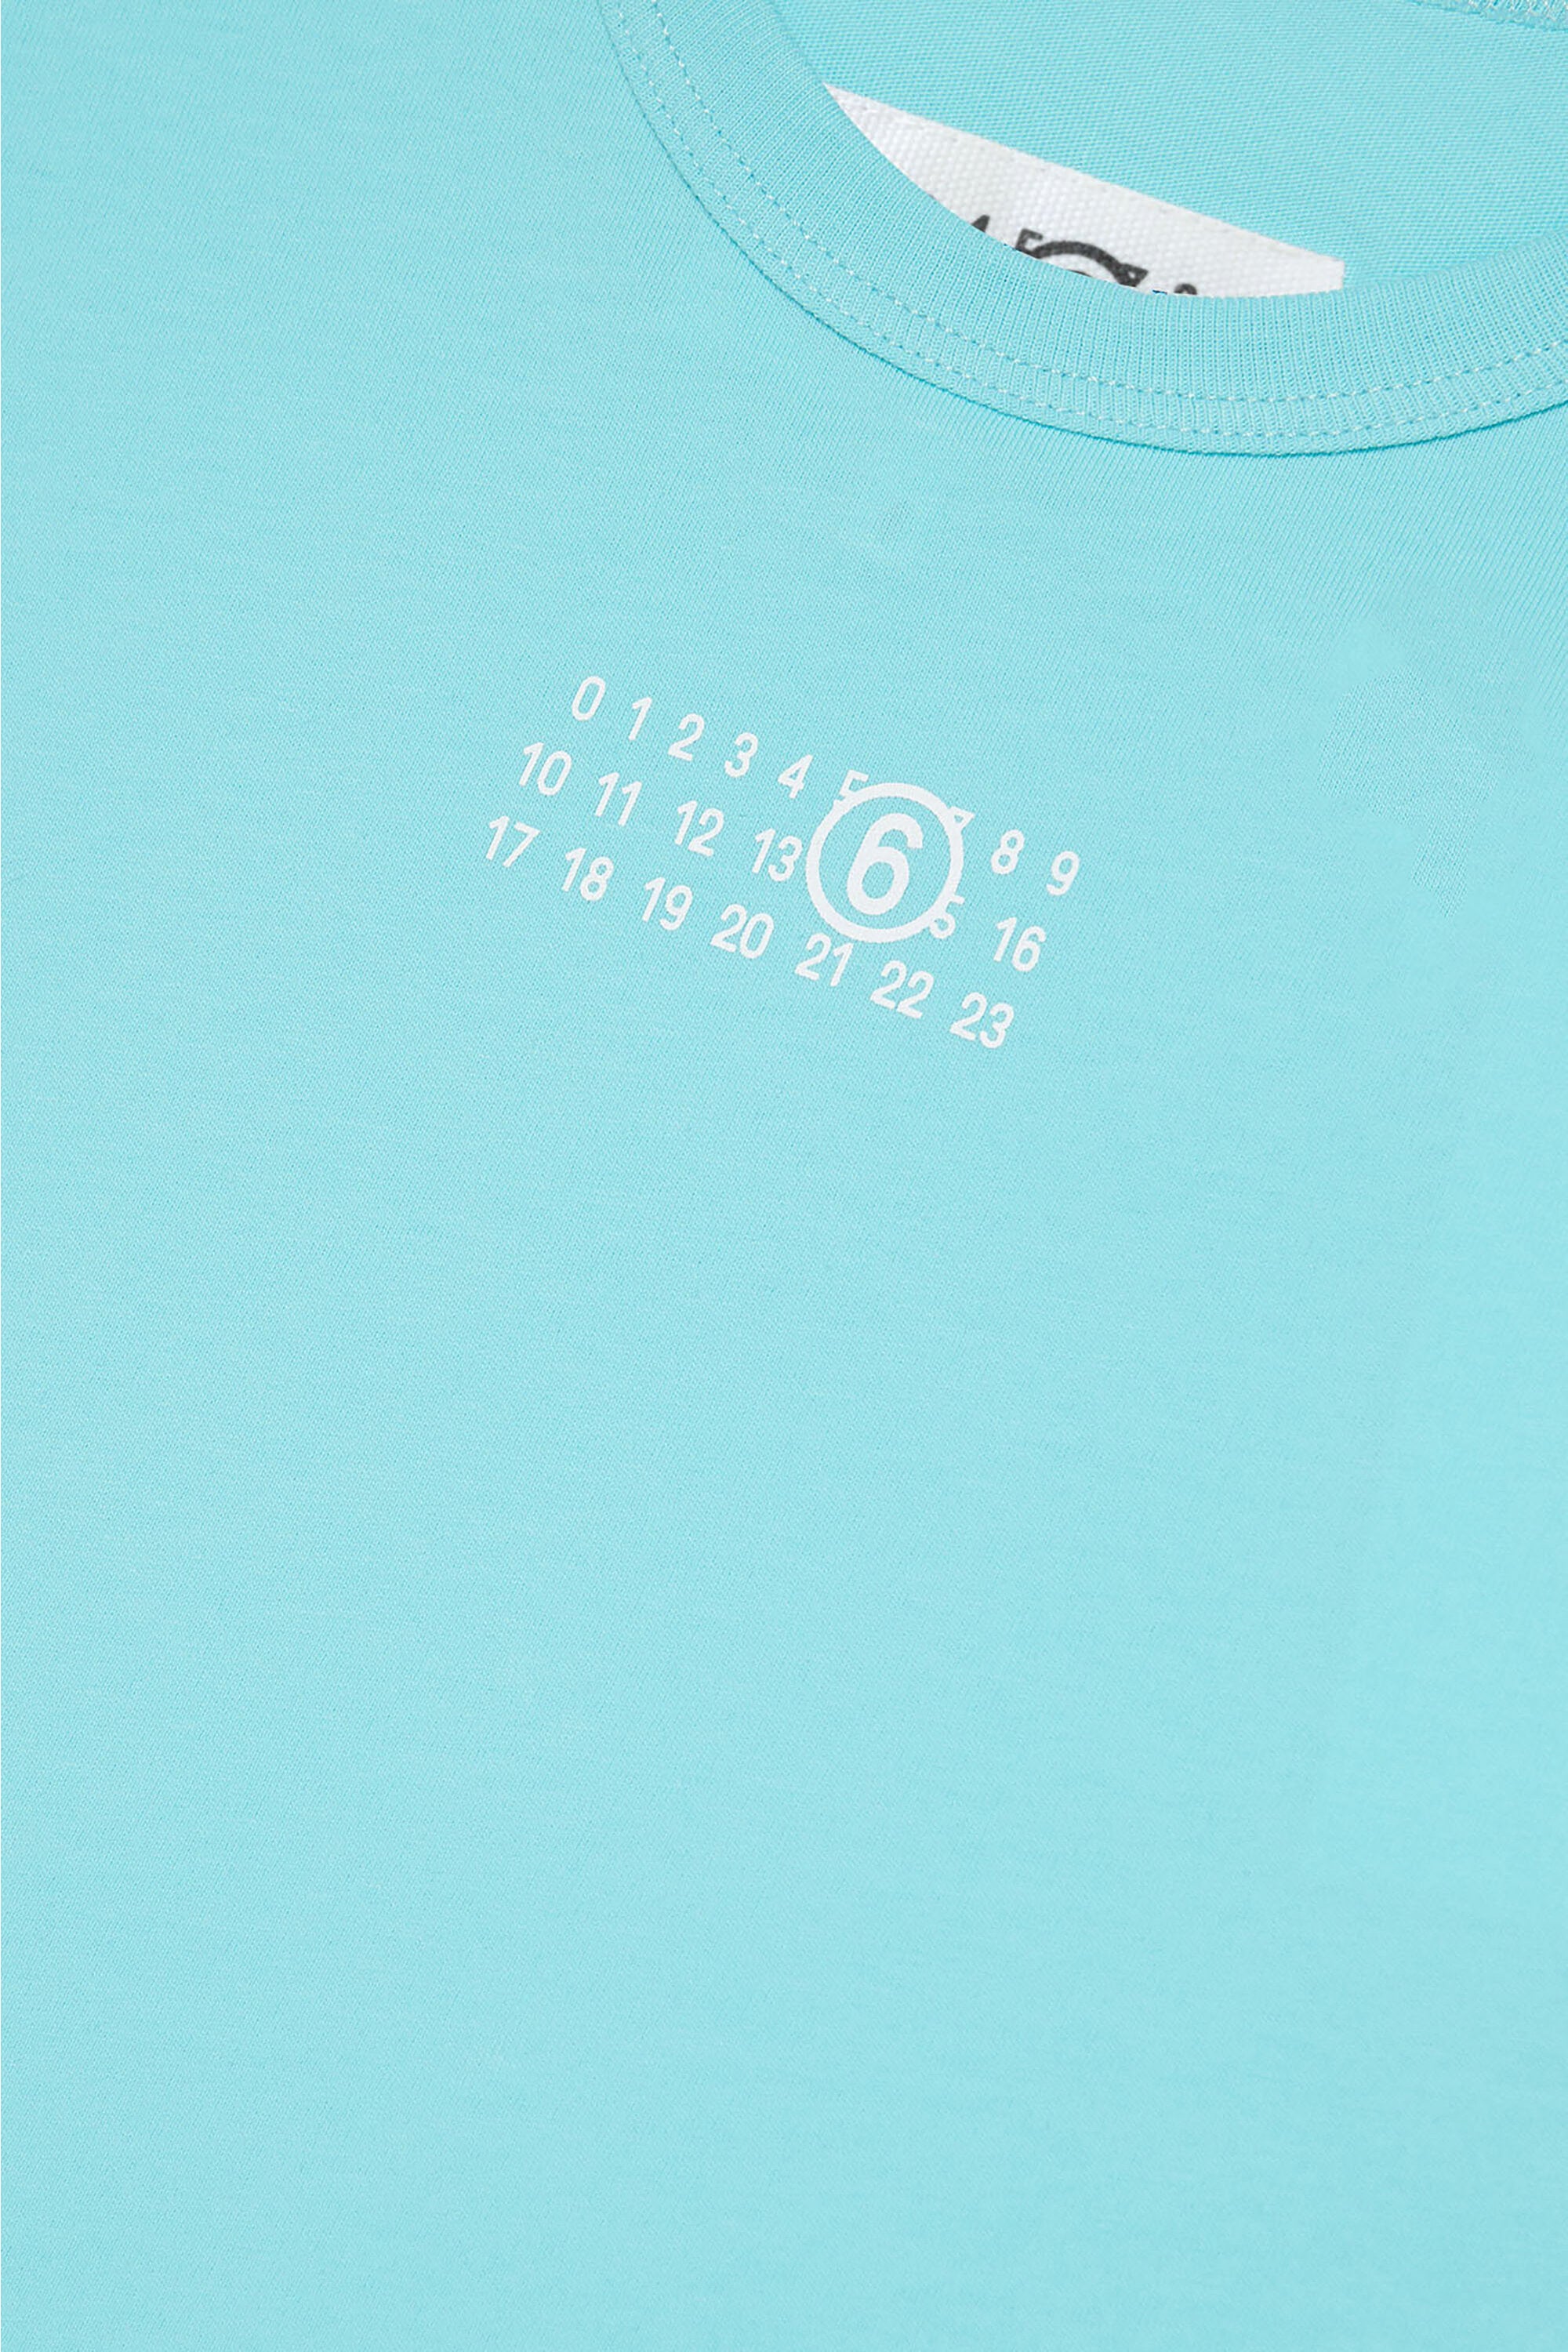 Sleeveless T-shirt branded with numeric logo